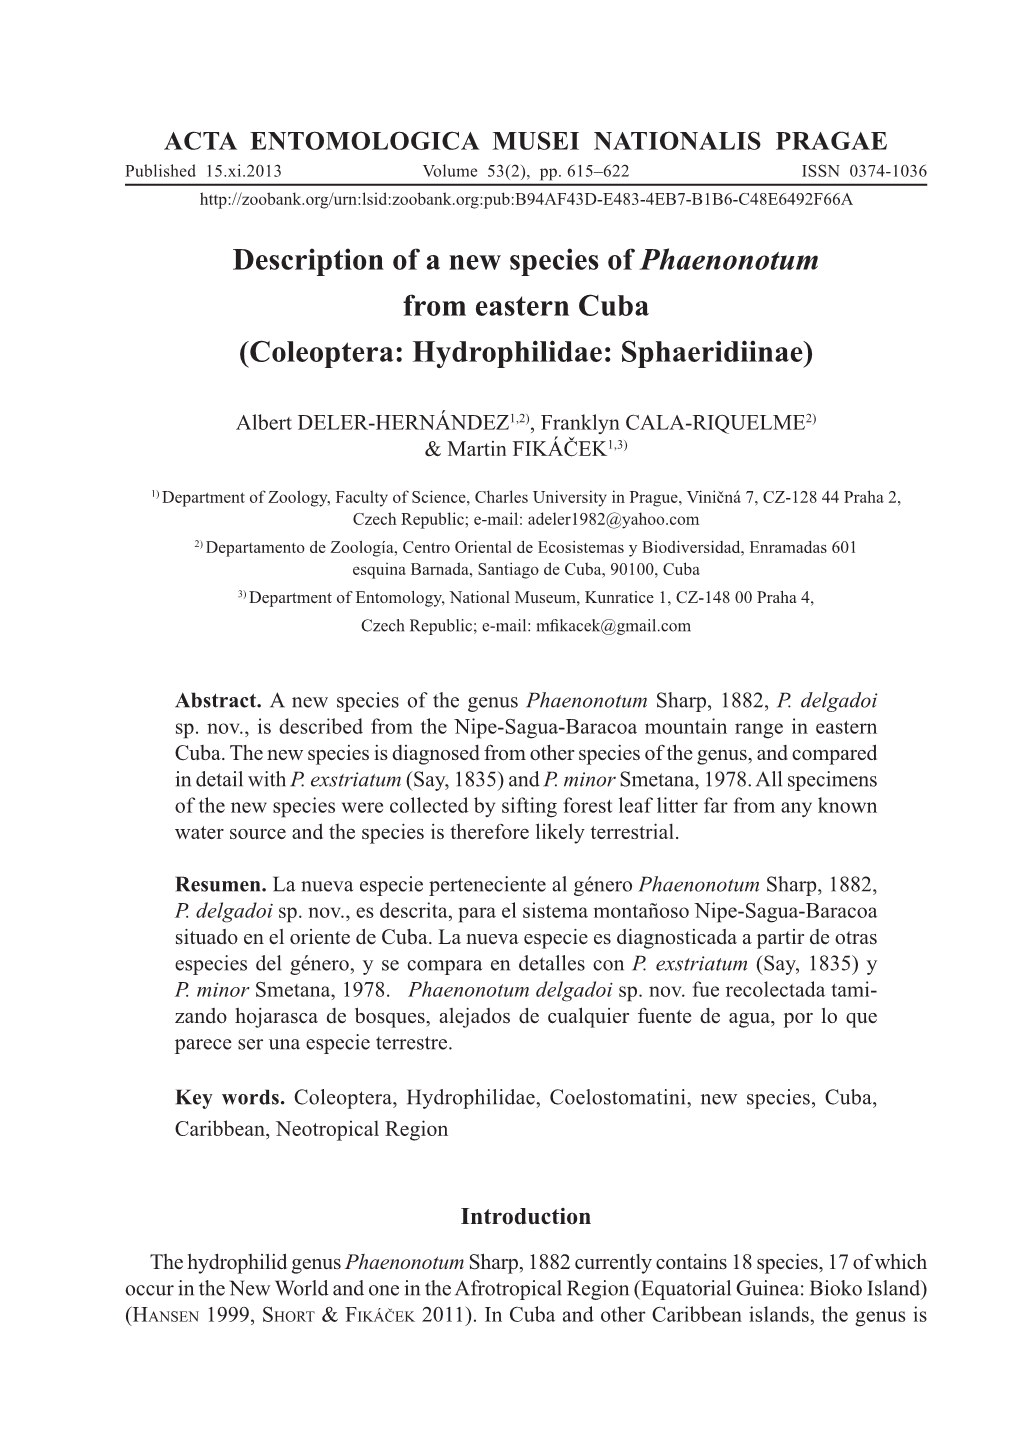 Description of a New Species of Phaenonotum from Eastern Cuba (Coleoptera: Hydrophilidae: Sphaeridiinae)